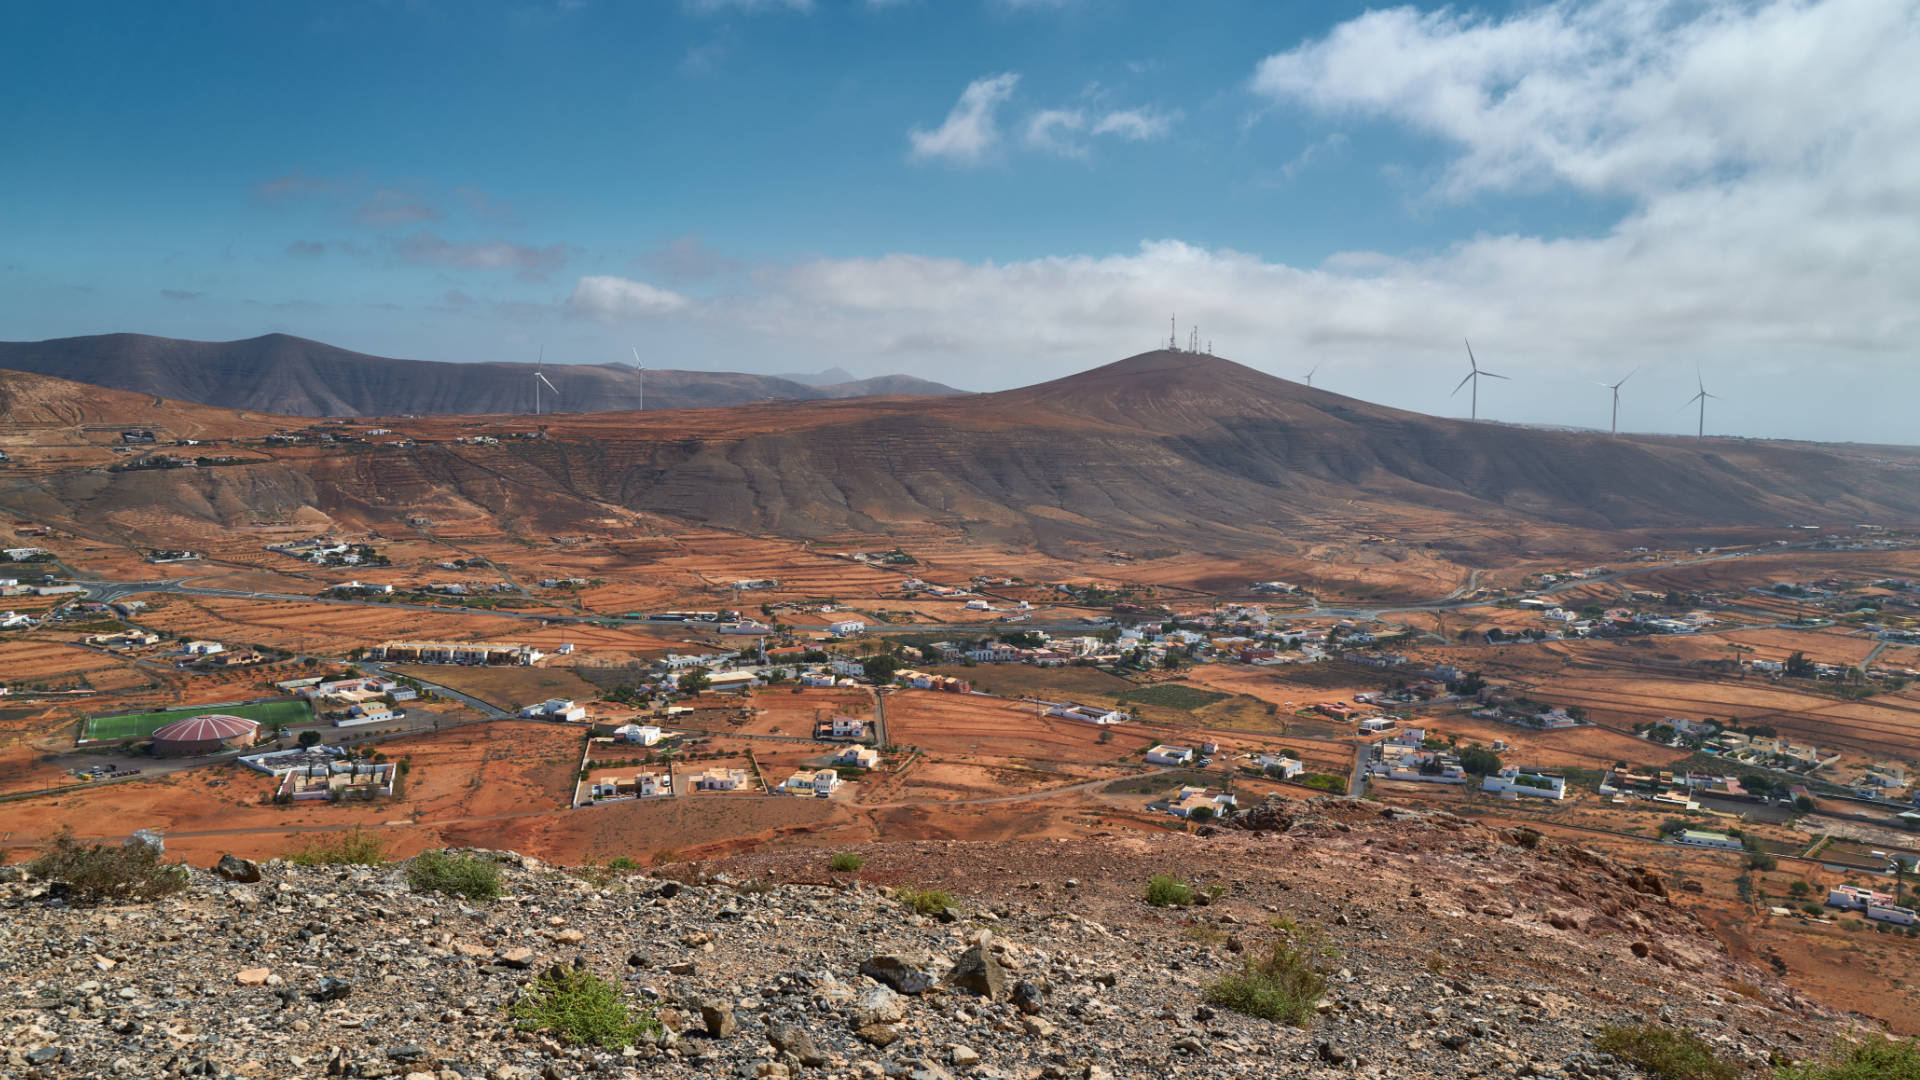 Montaña San Andrés Tetir Fuerteventura.